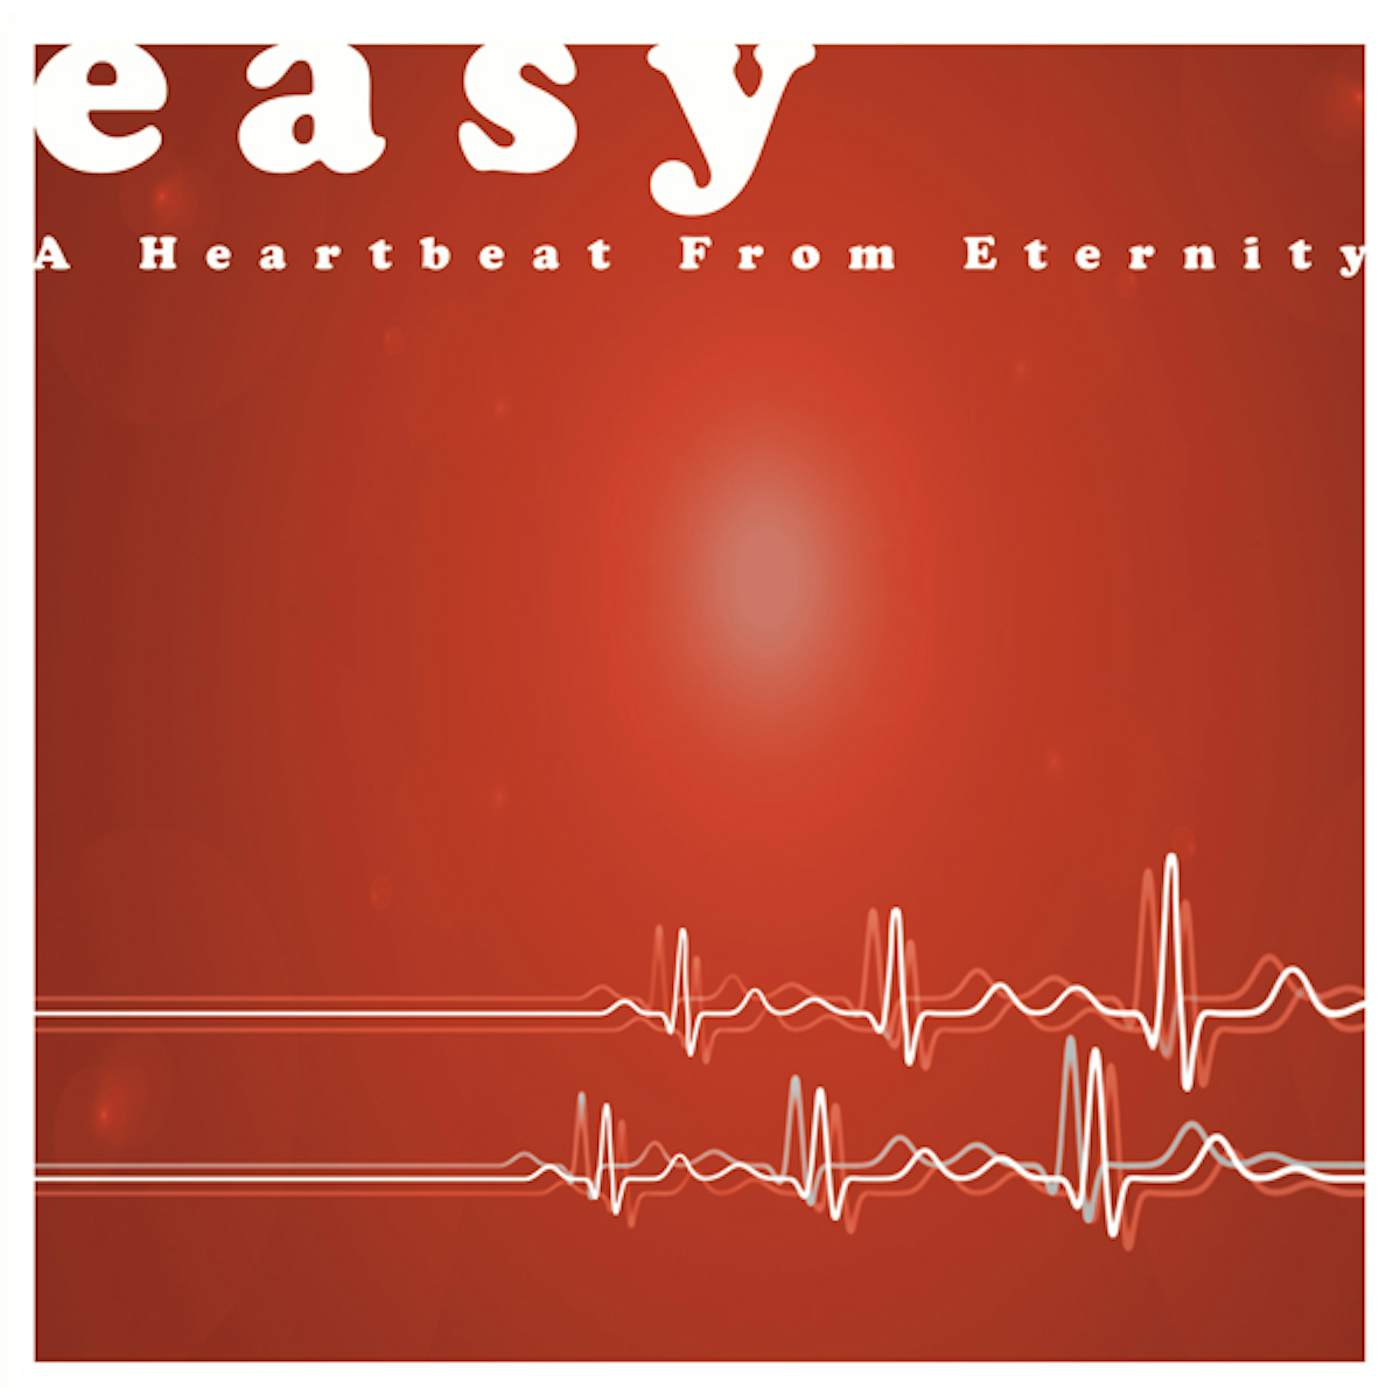 Easy HEARTBEAT FROM ETERNITY Vinyl Record